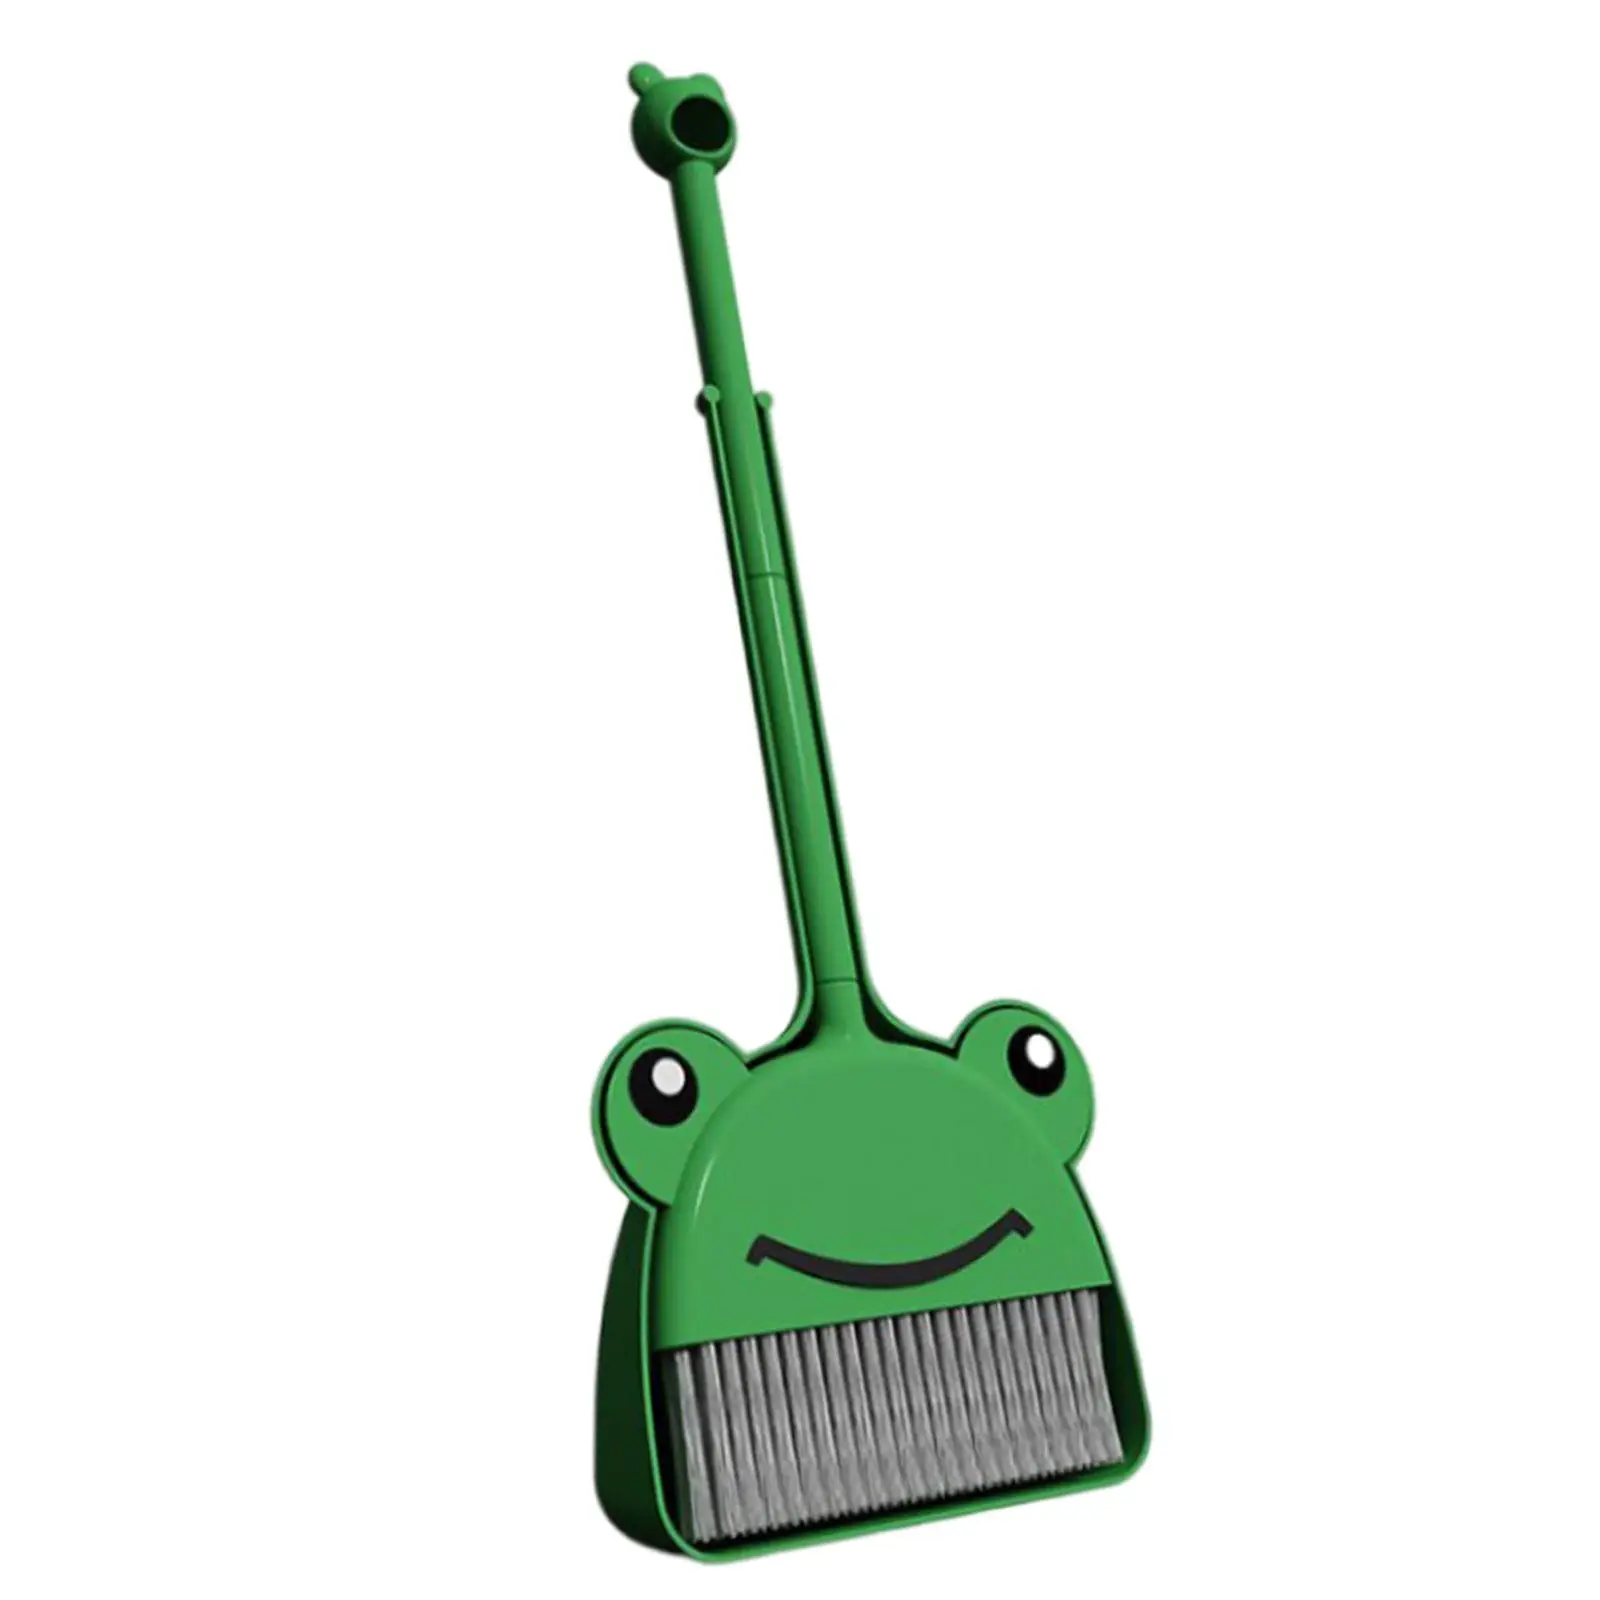 Miniature Sweeping House Tool Toy Set Little Housekeeping Helper Set Children Cleaning Broom Dustpan Set